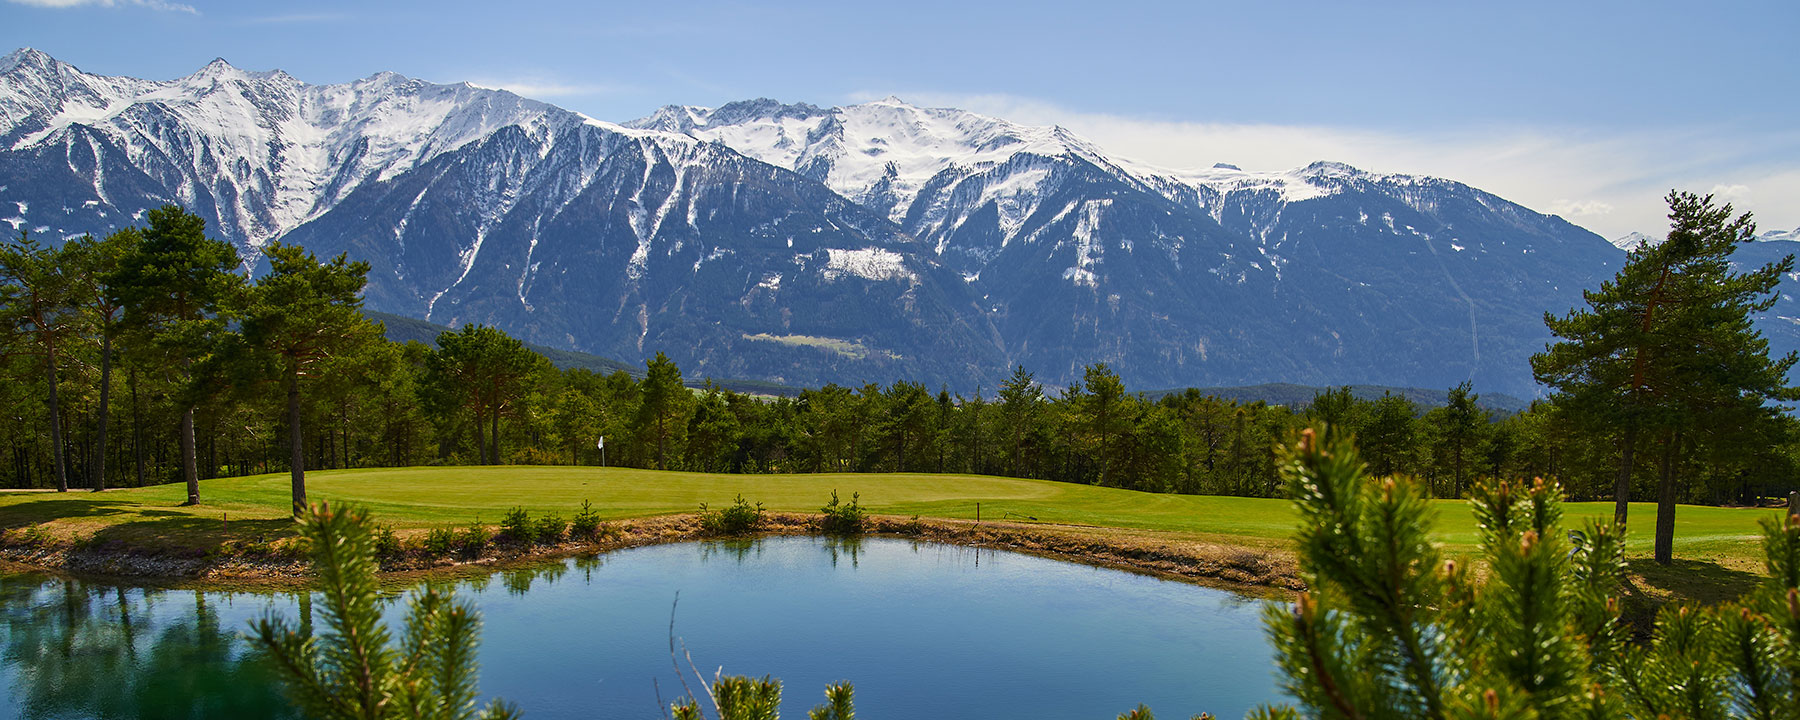 Golfherz Tirol - Golfen im Herzen Tirols